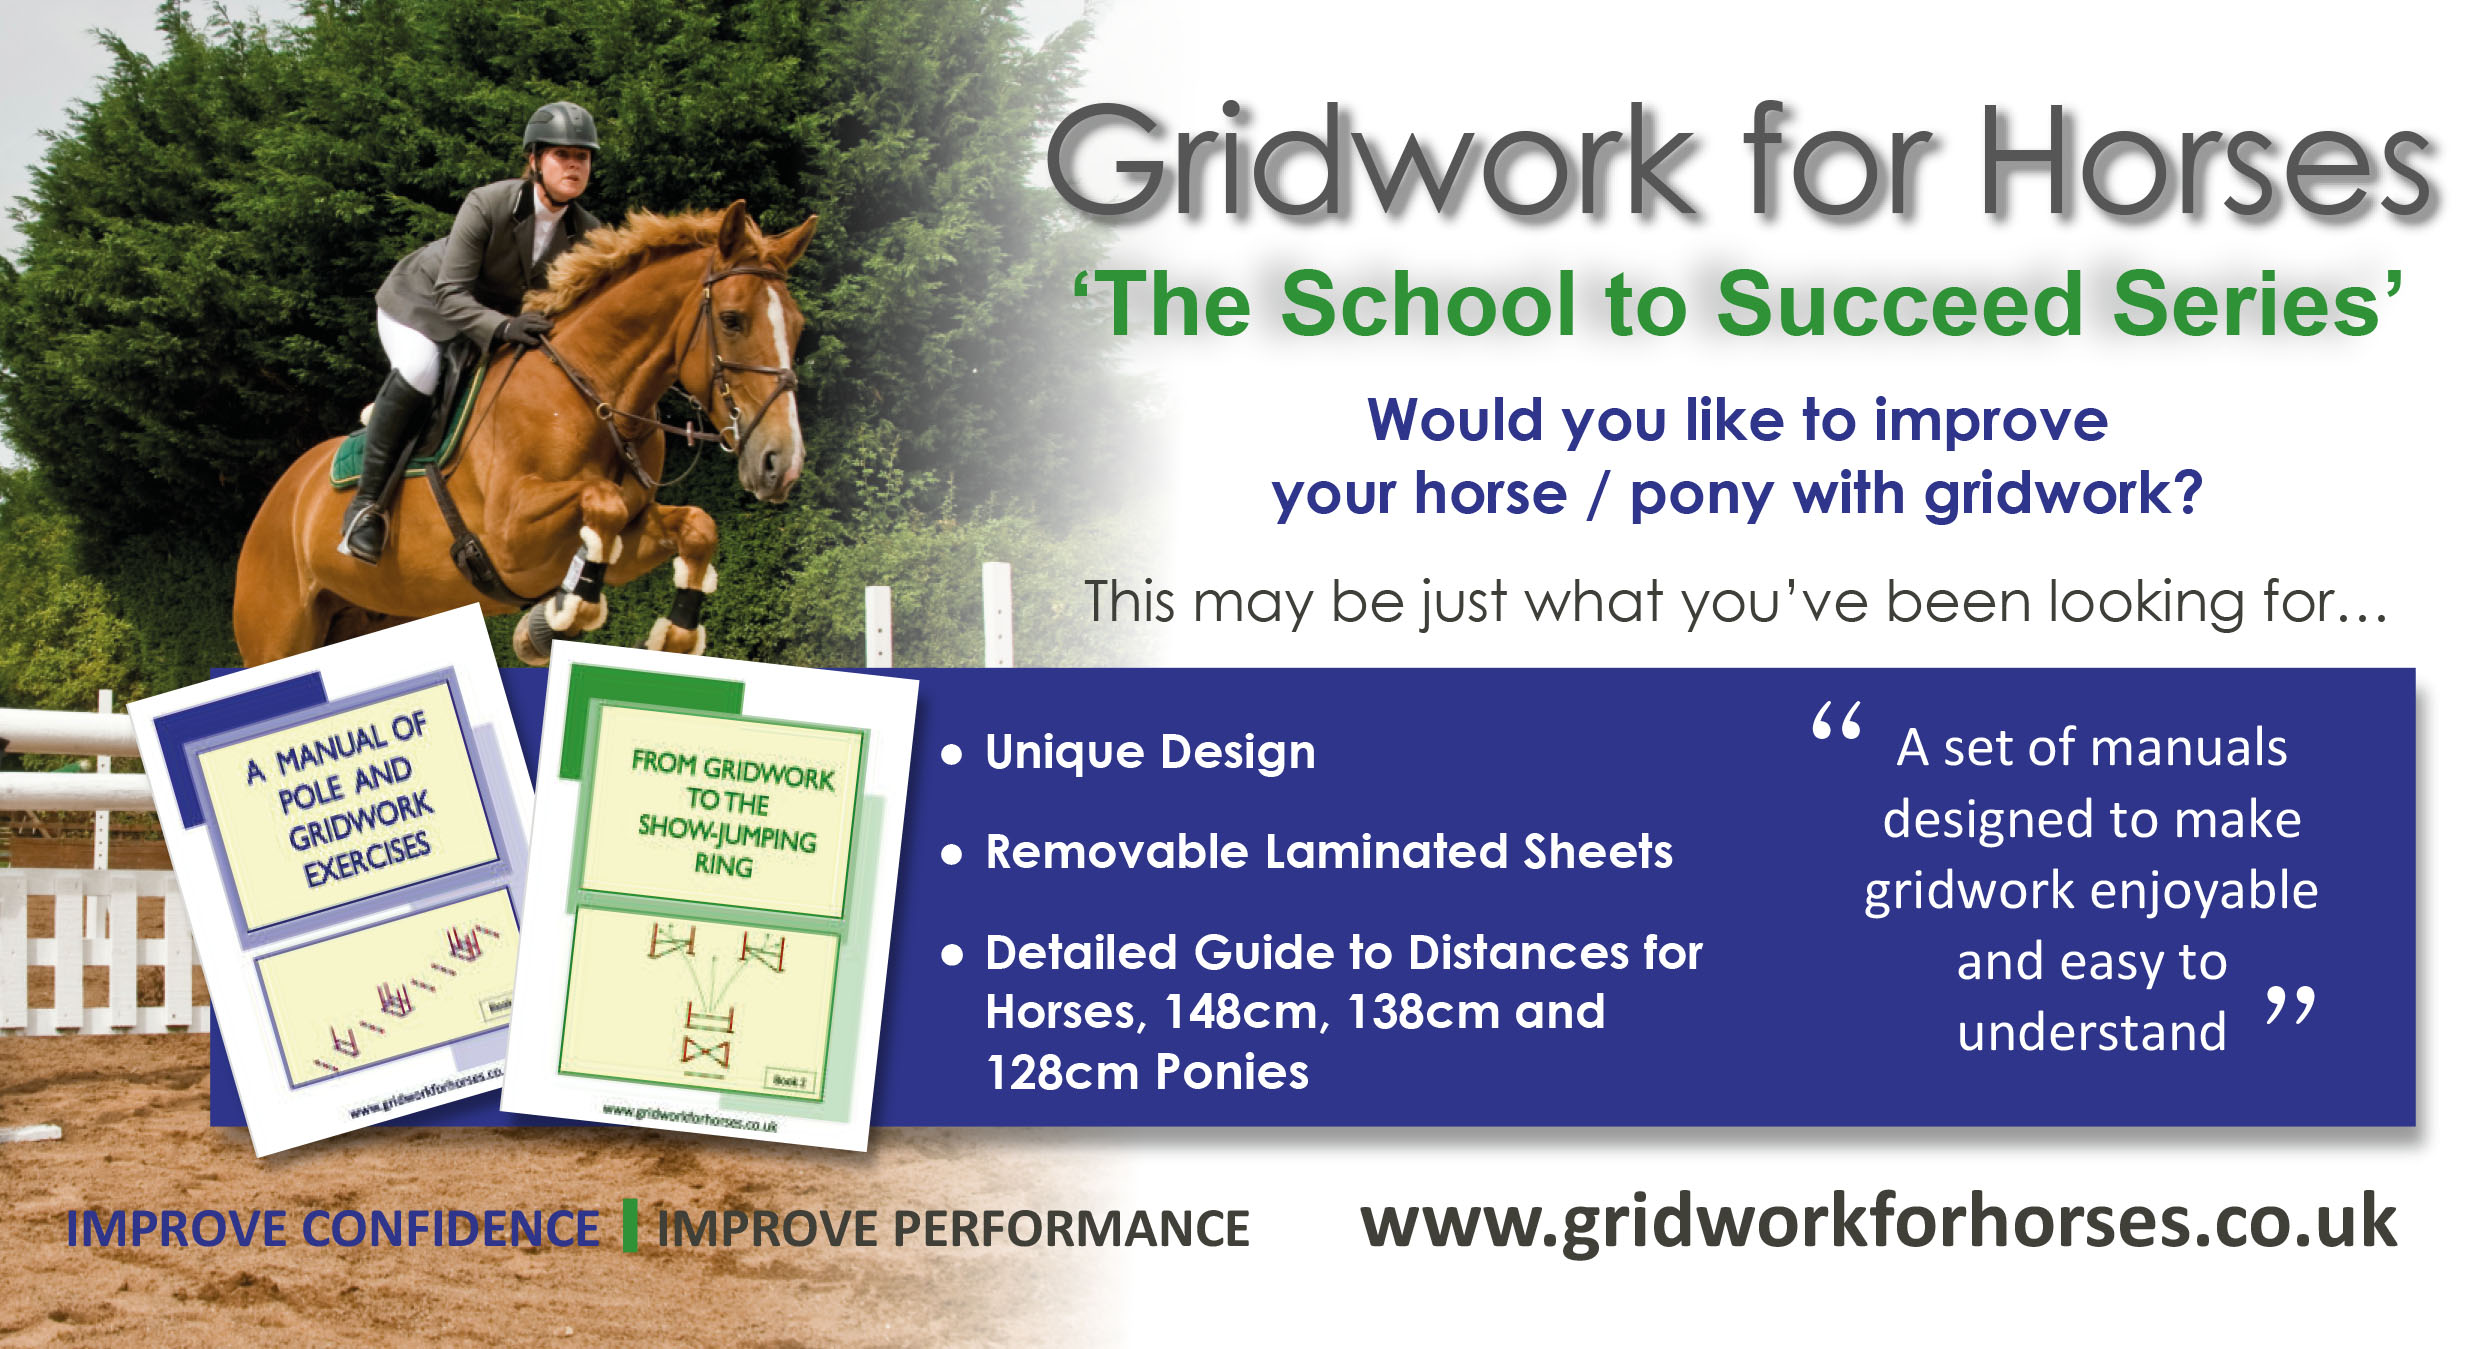 Gridwork for Horses advertisment